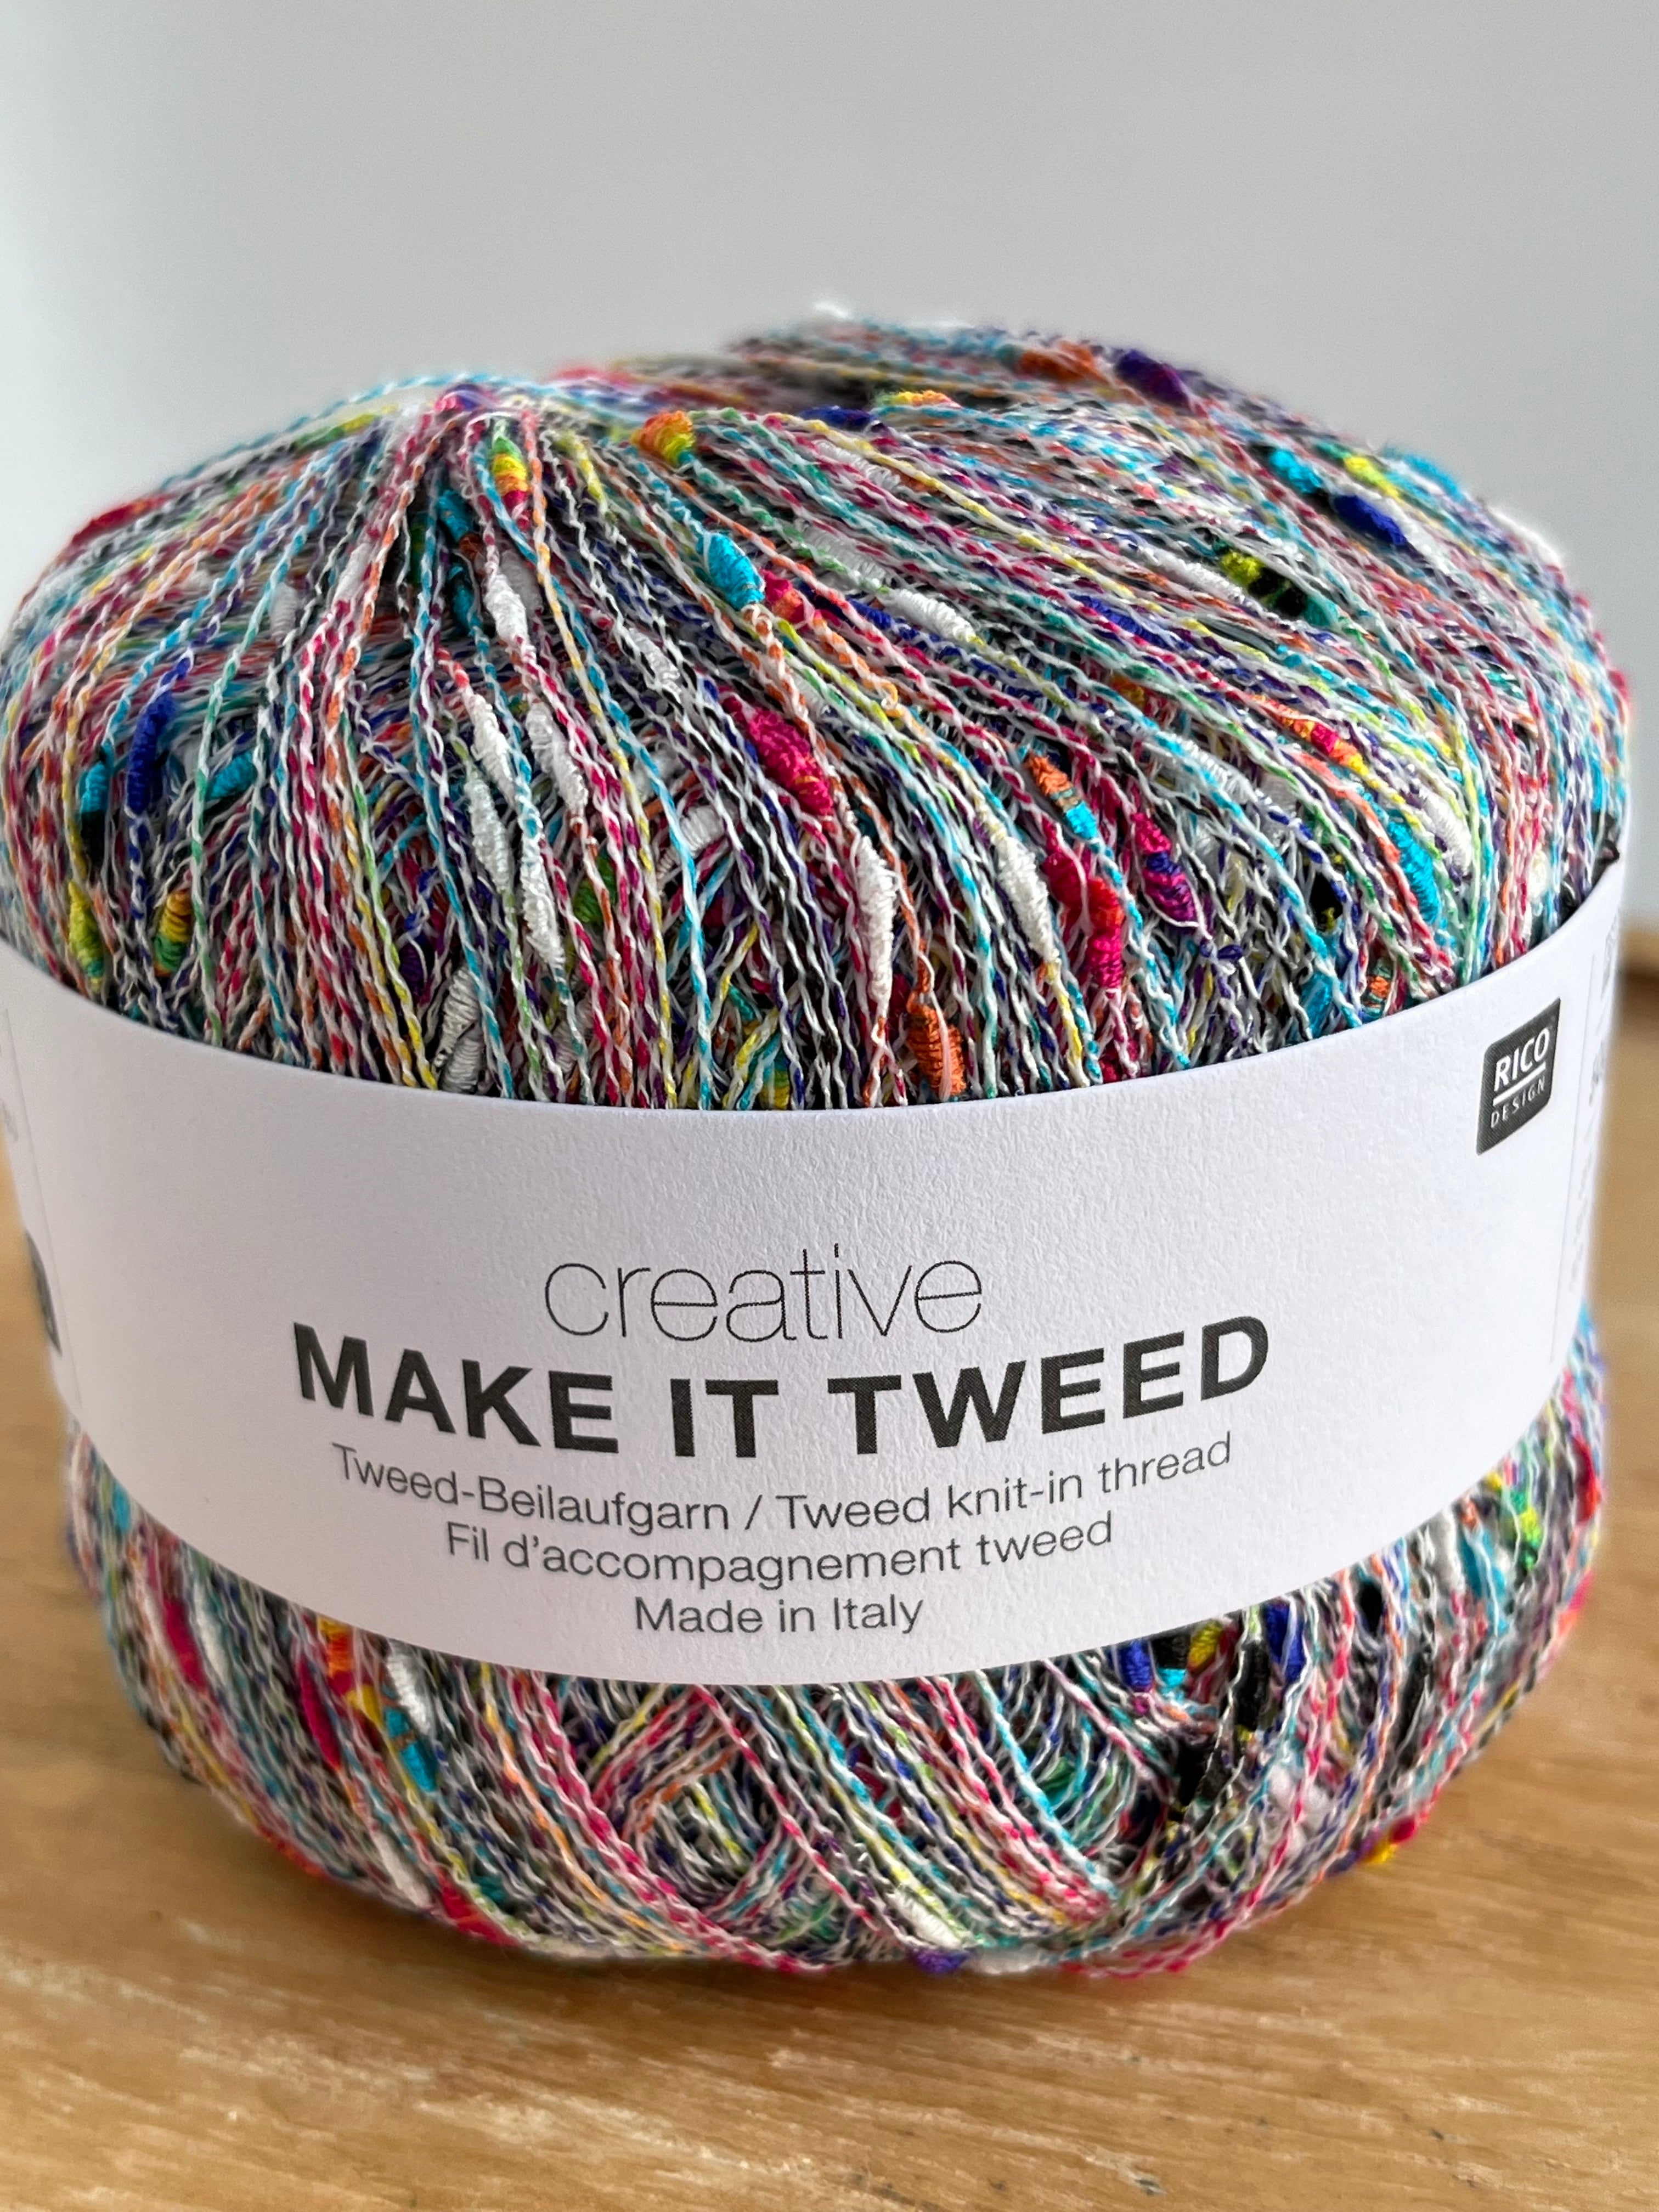 Make It Tweed yarn